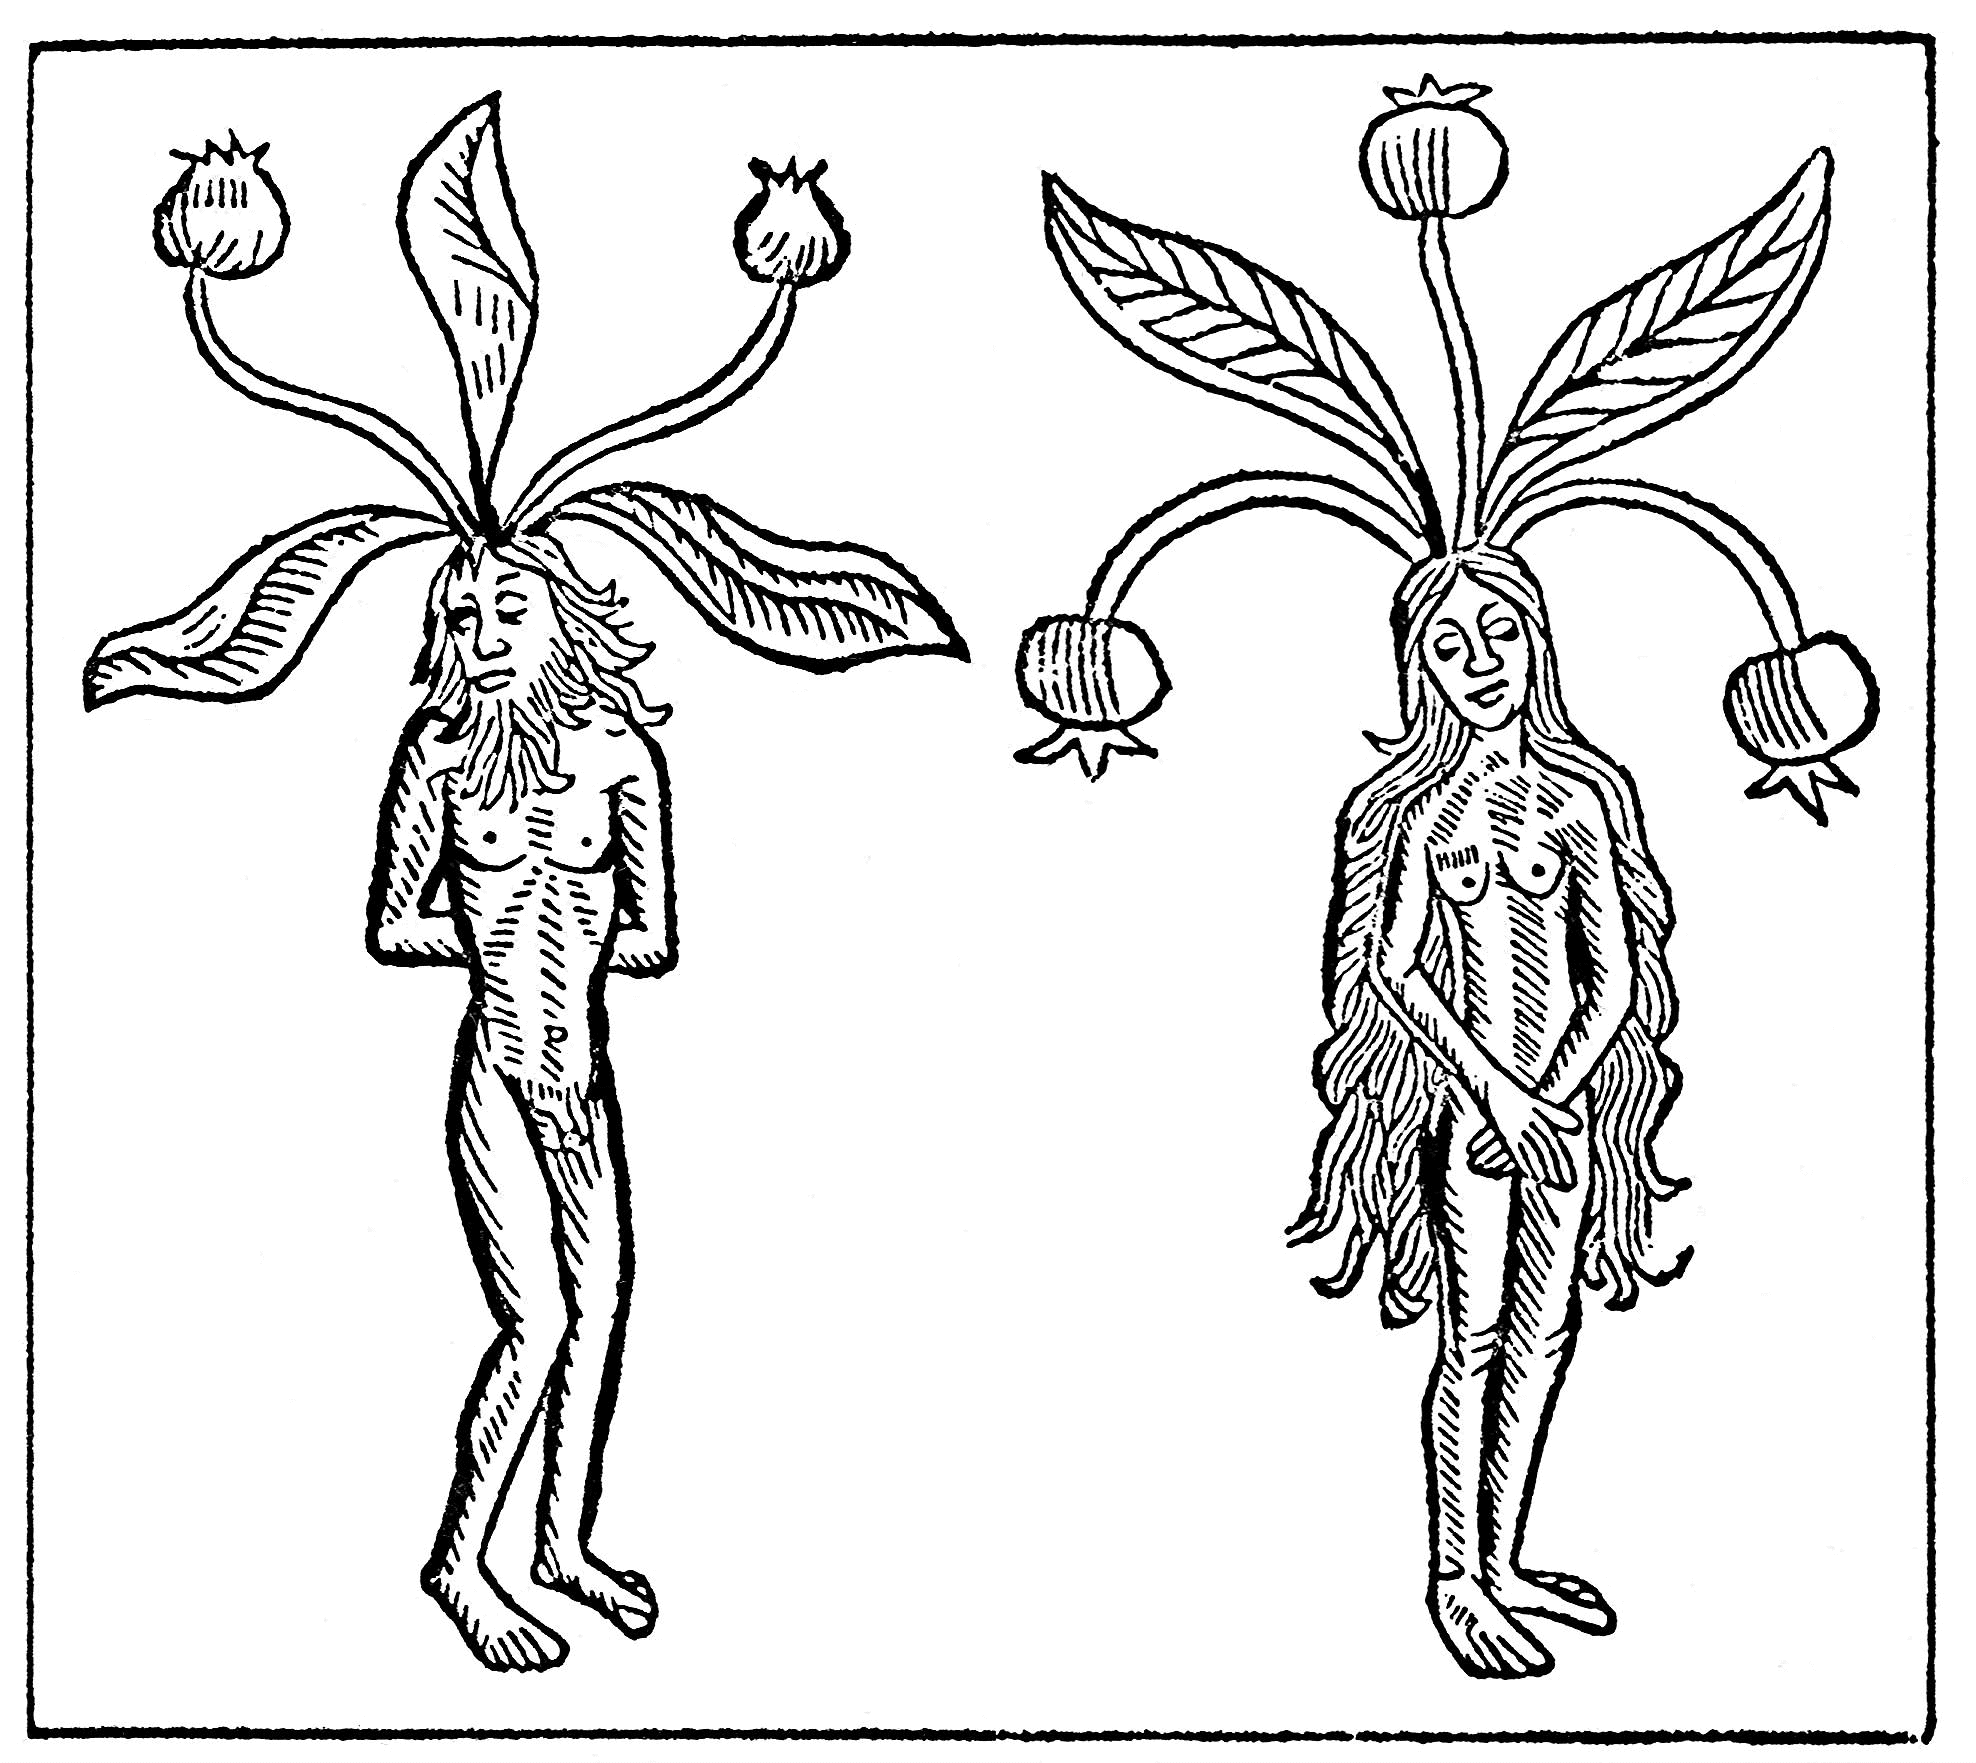 Mandrake man and woman from 